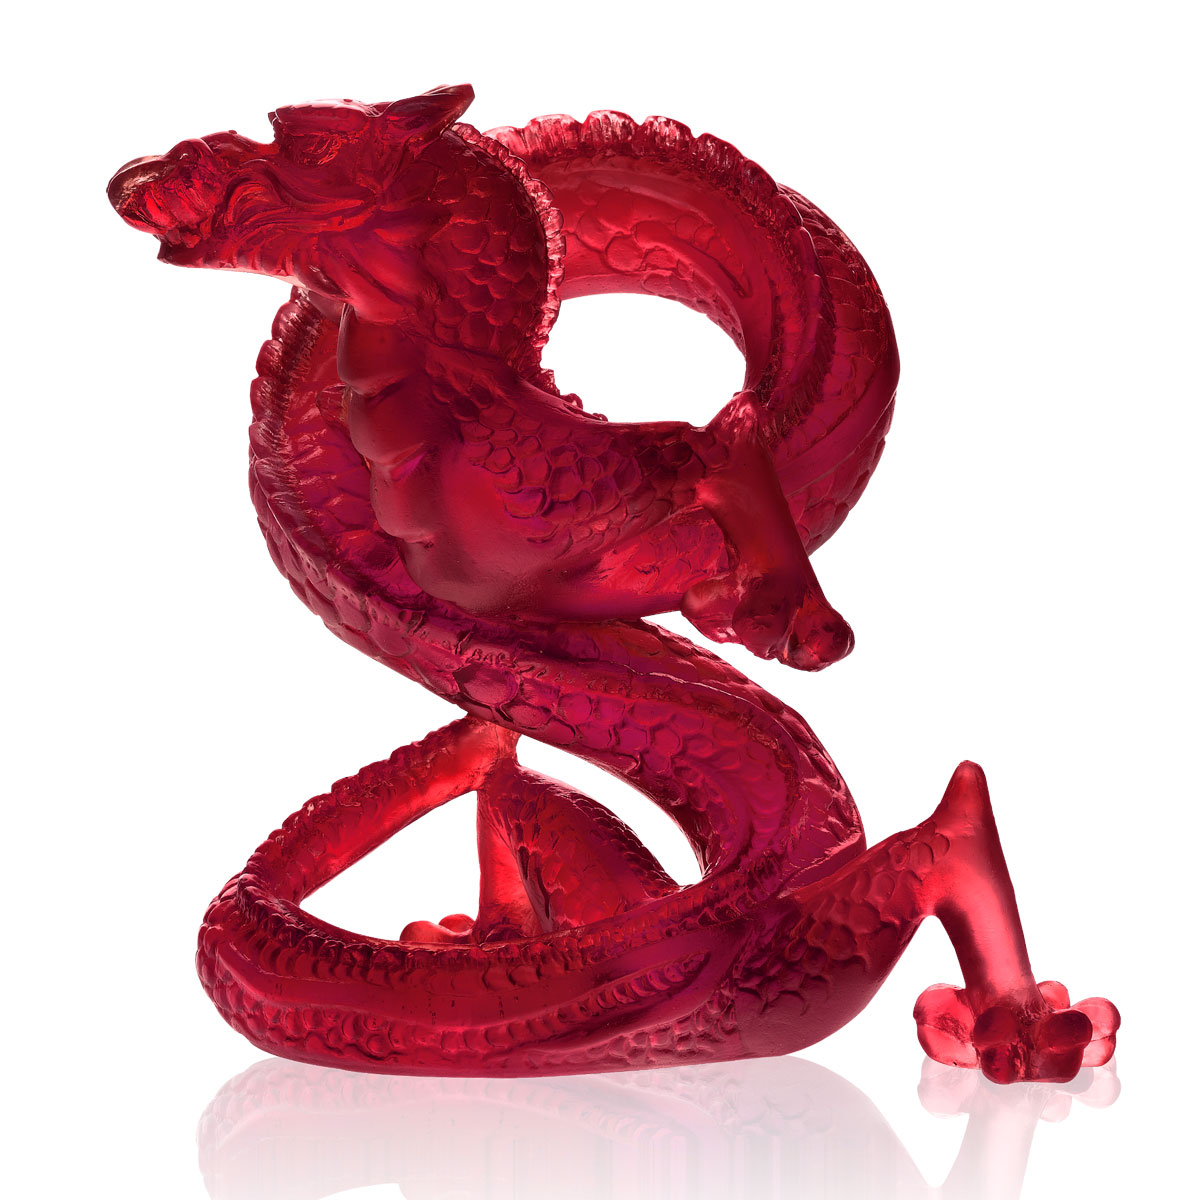 Daum Horoscope Dragon 8 Figure, Limited Edition